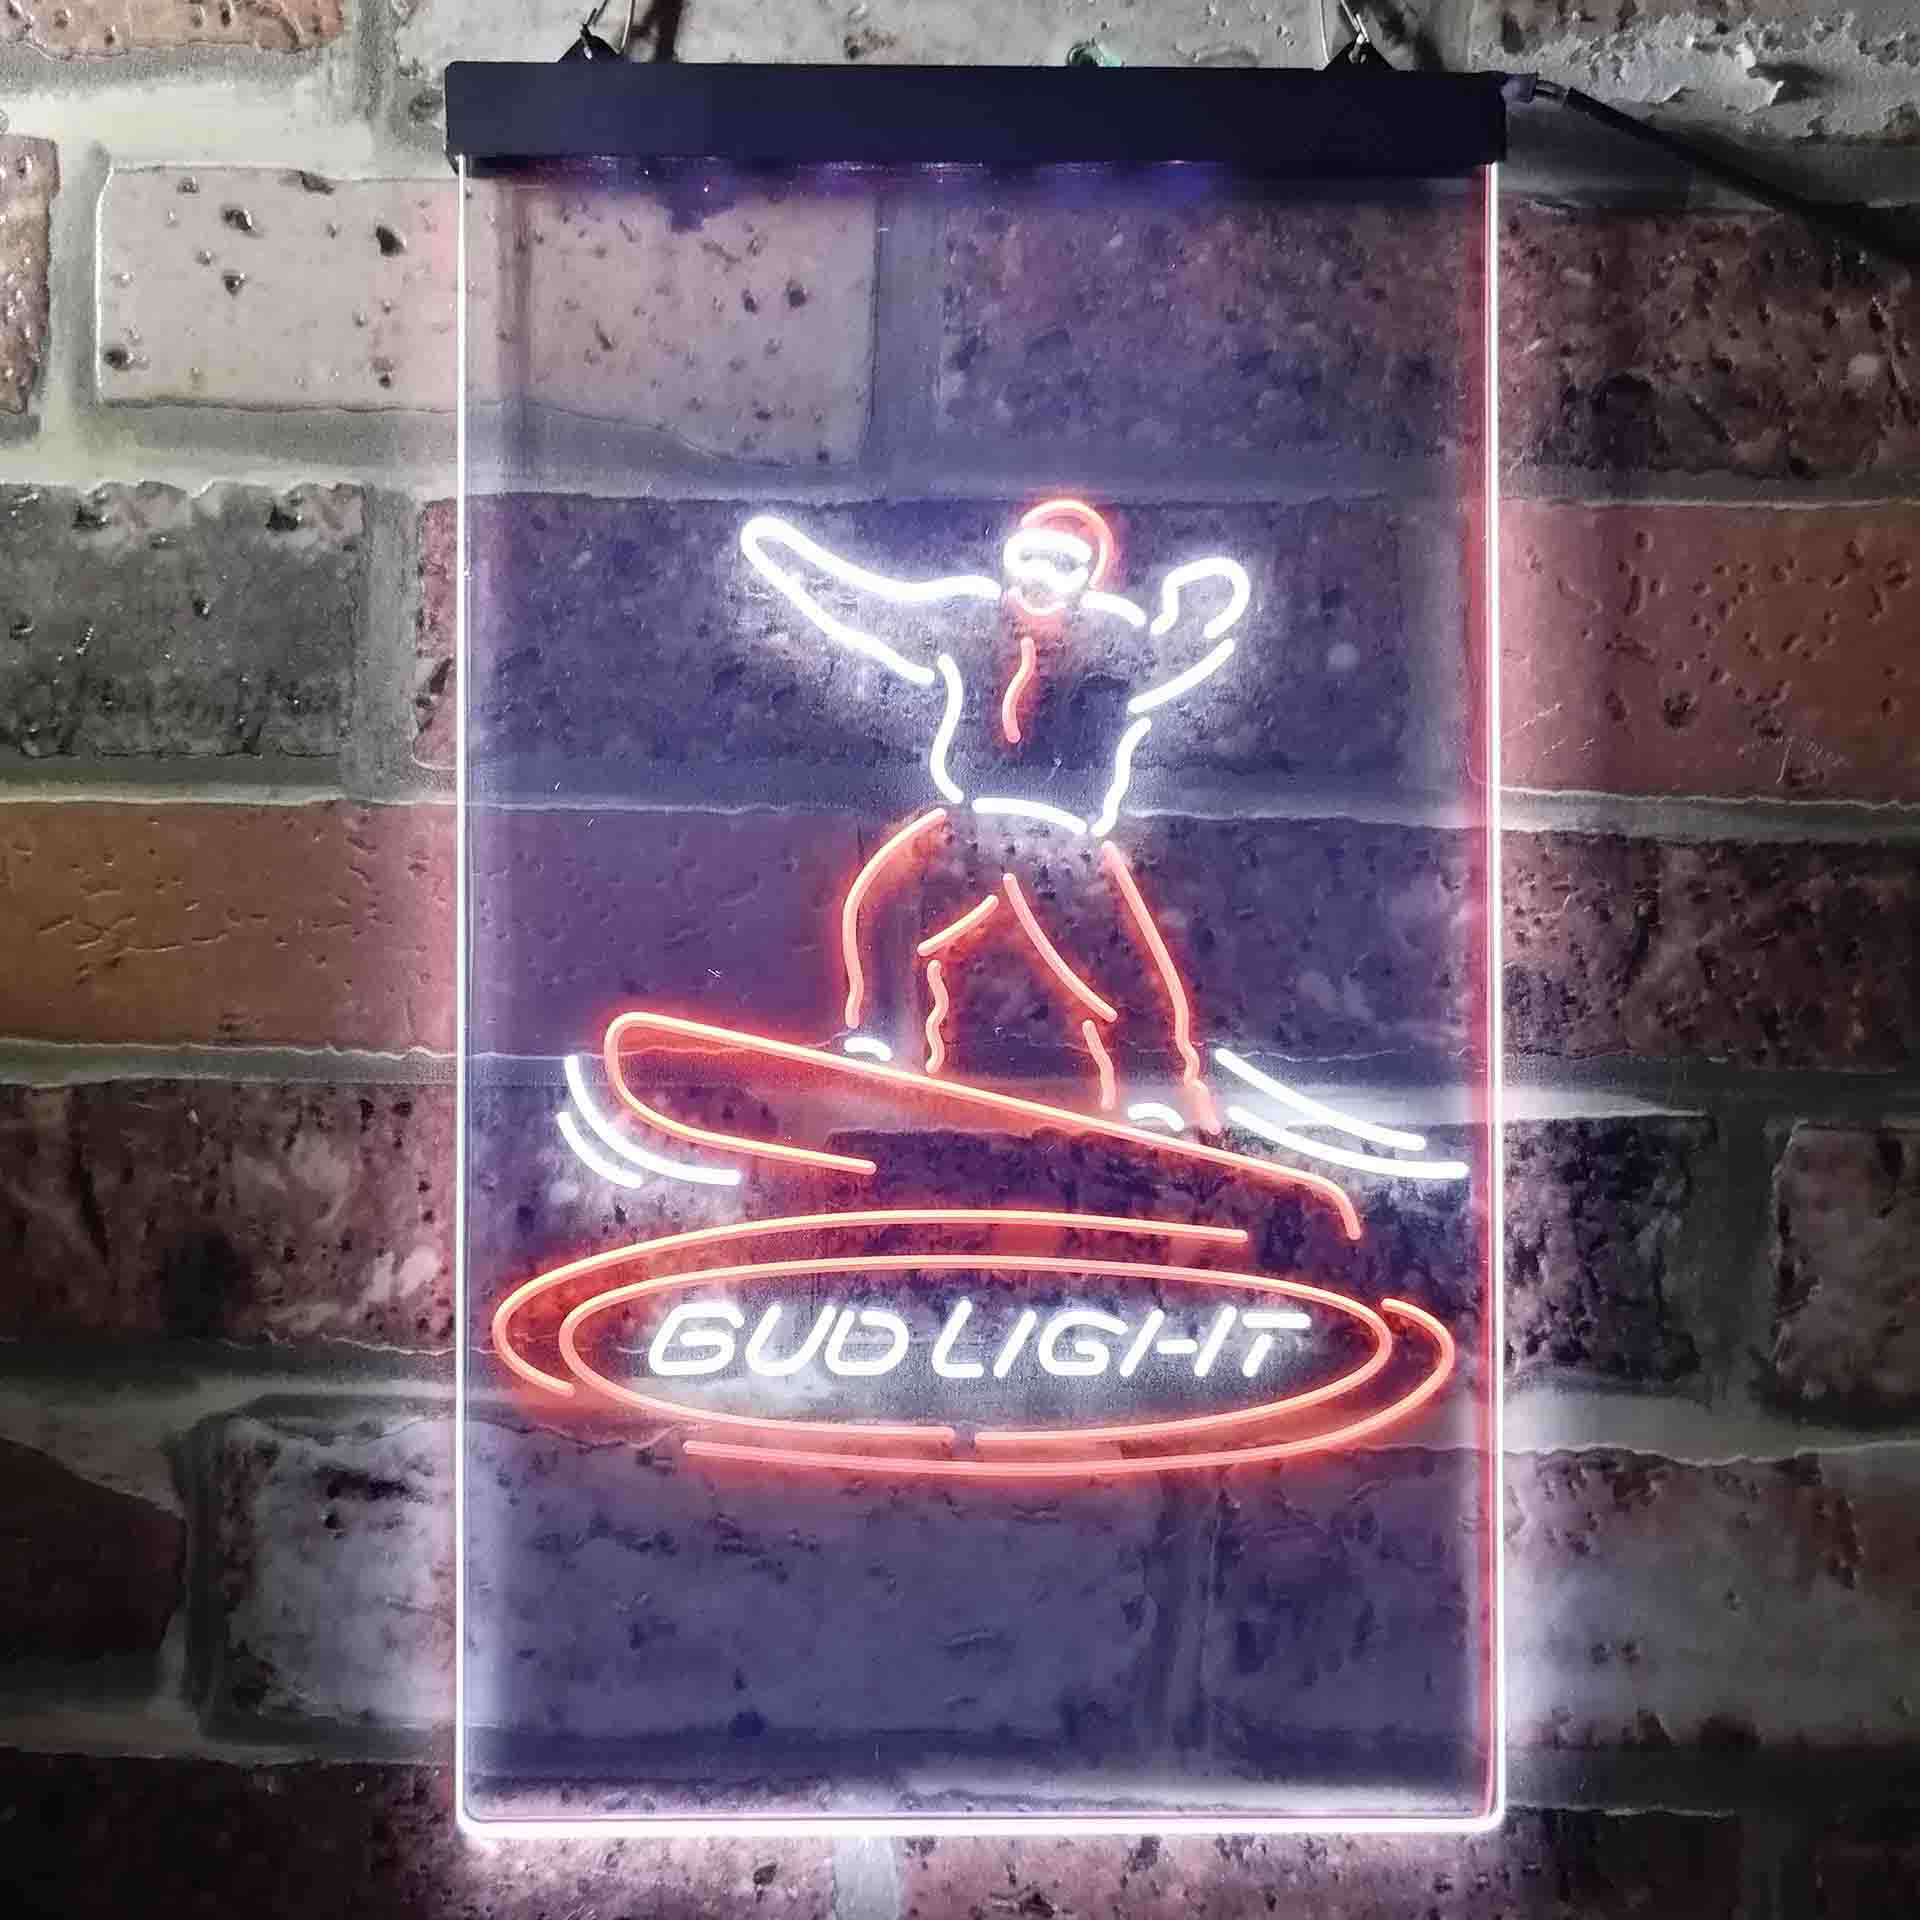 Bud Light Snowboarder Neon-Like LED Sign - ProLedSign